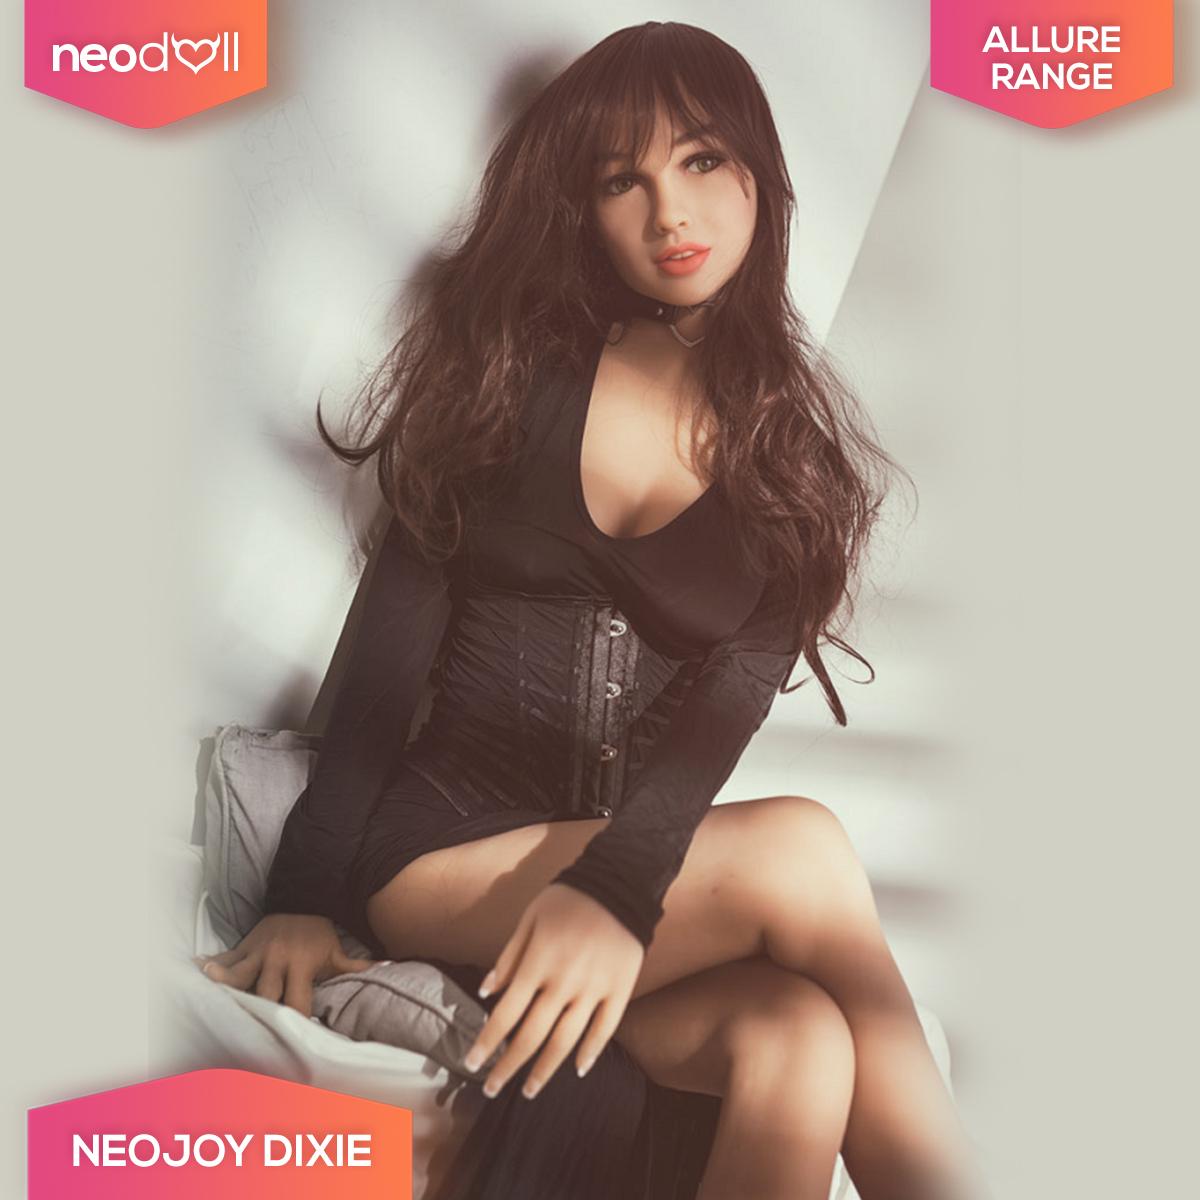 Neodoll Allure Dixie - Realistic Sex Doll -165cm